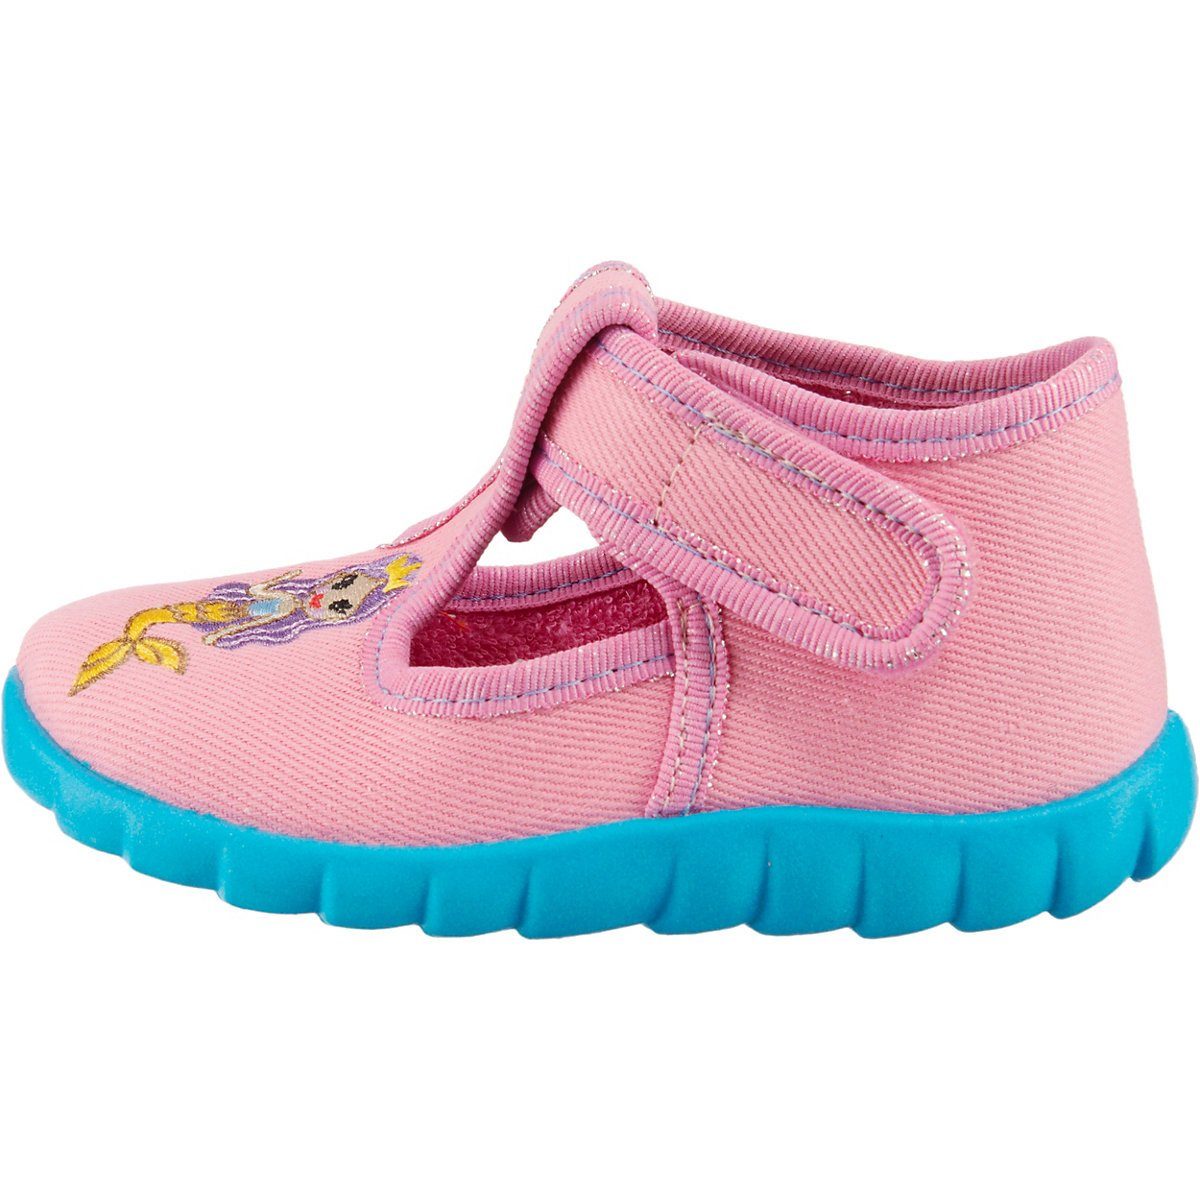 Schuhe Babyschuhe Mädchen Fischer-Markenschuh Baby Hausschuhe für Mädchen Hausschuh